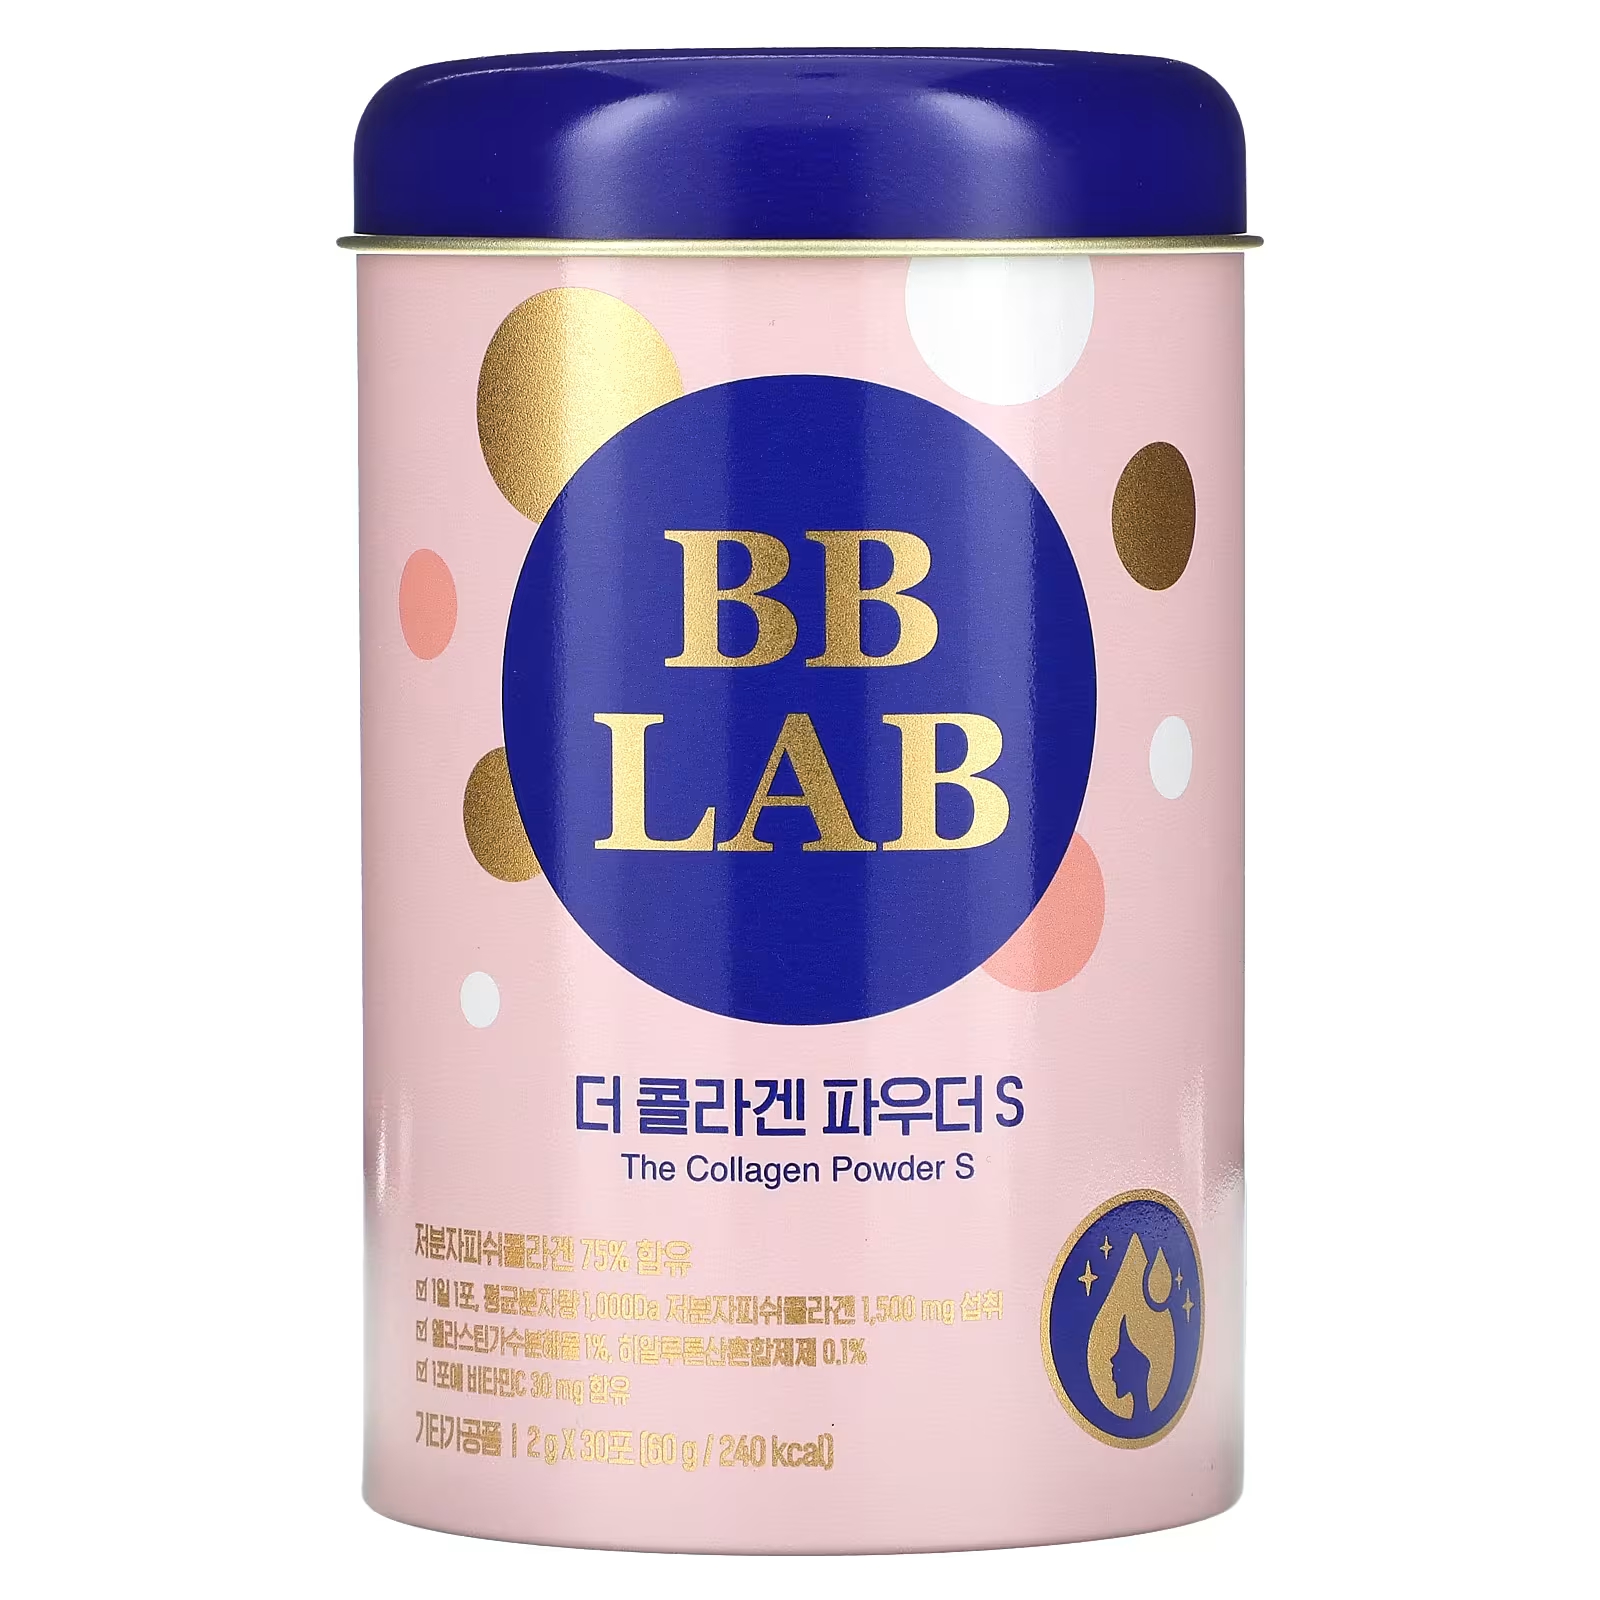 Питьевой коллаген BB Lab The Collagen Powder S, 30 пакетов по 2 г il yang pharm daily beauty collagen plus коллаген питьевой 30 шт по 2 гр